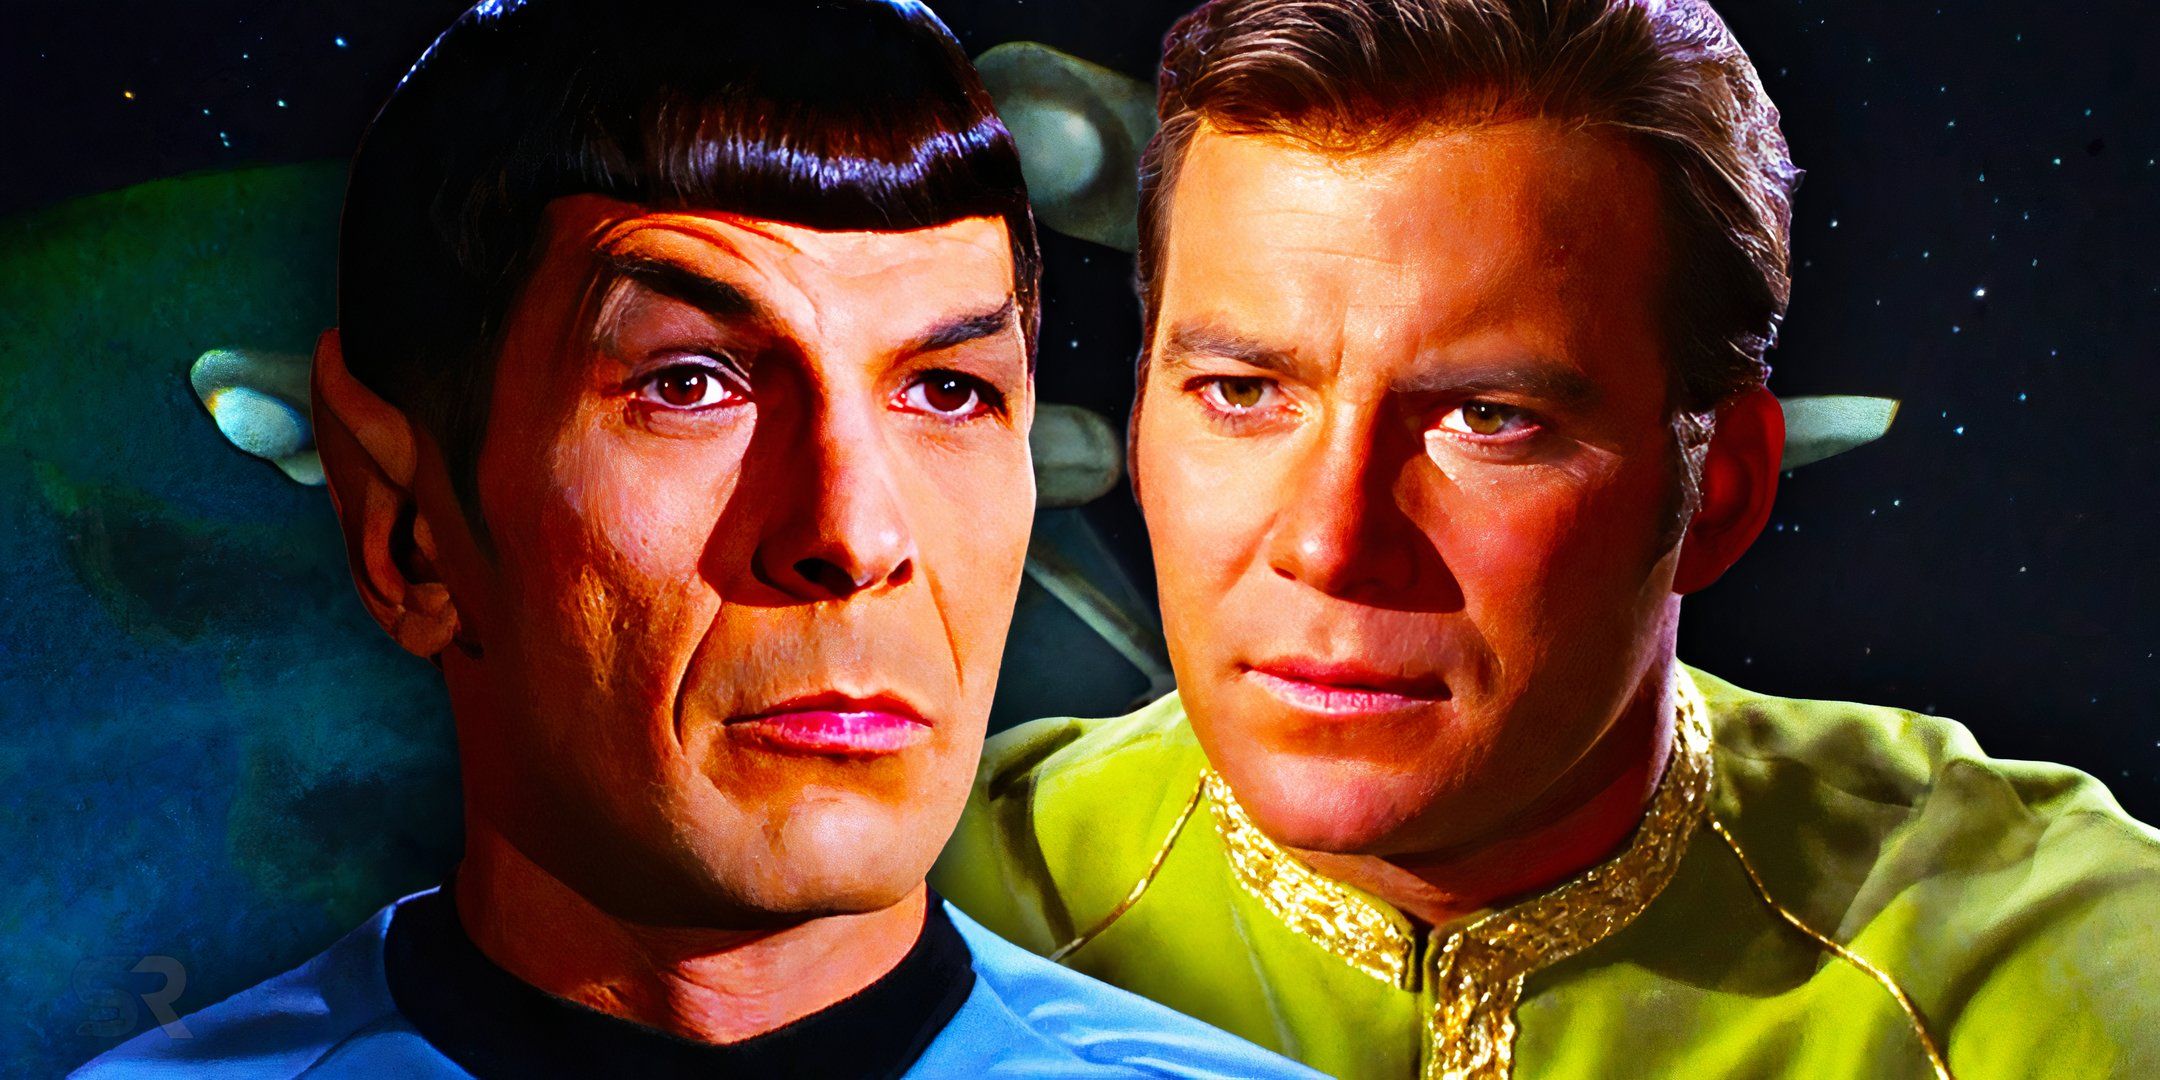 Mr. Spock and Captain Kirk in Star Trek